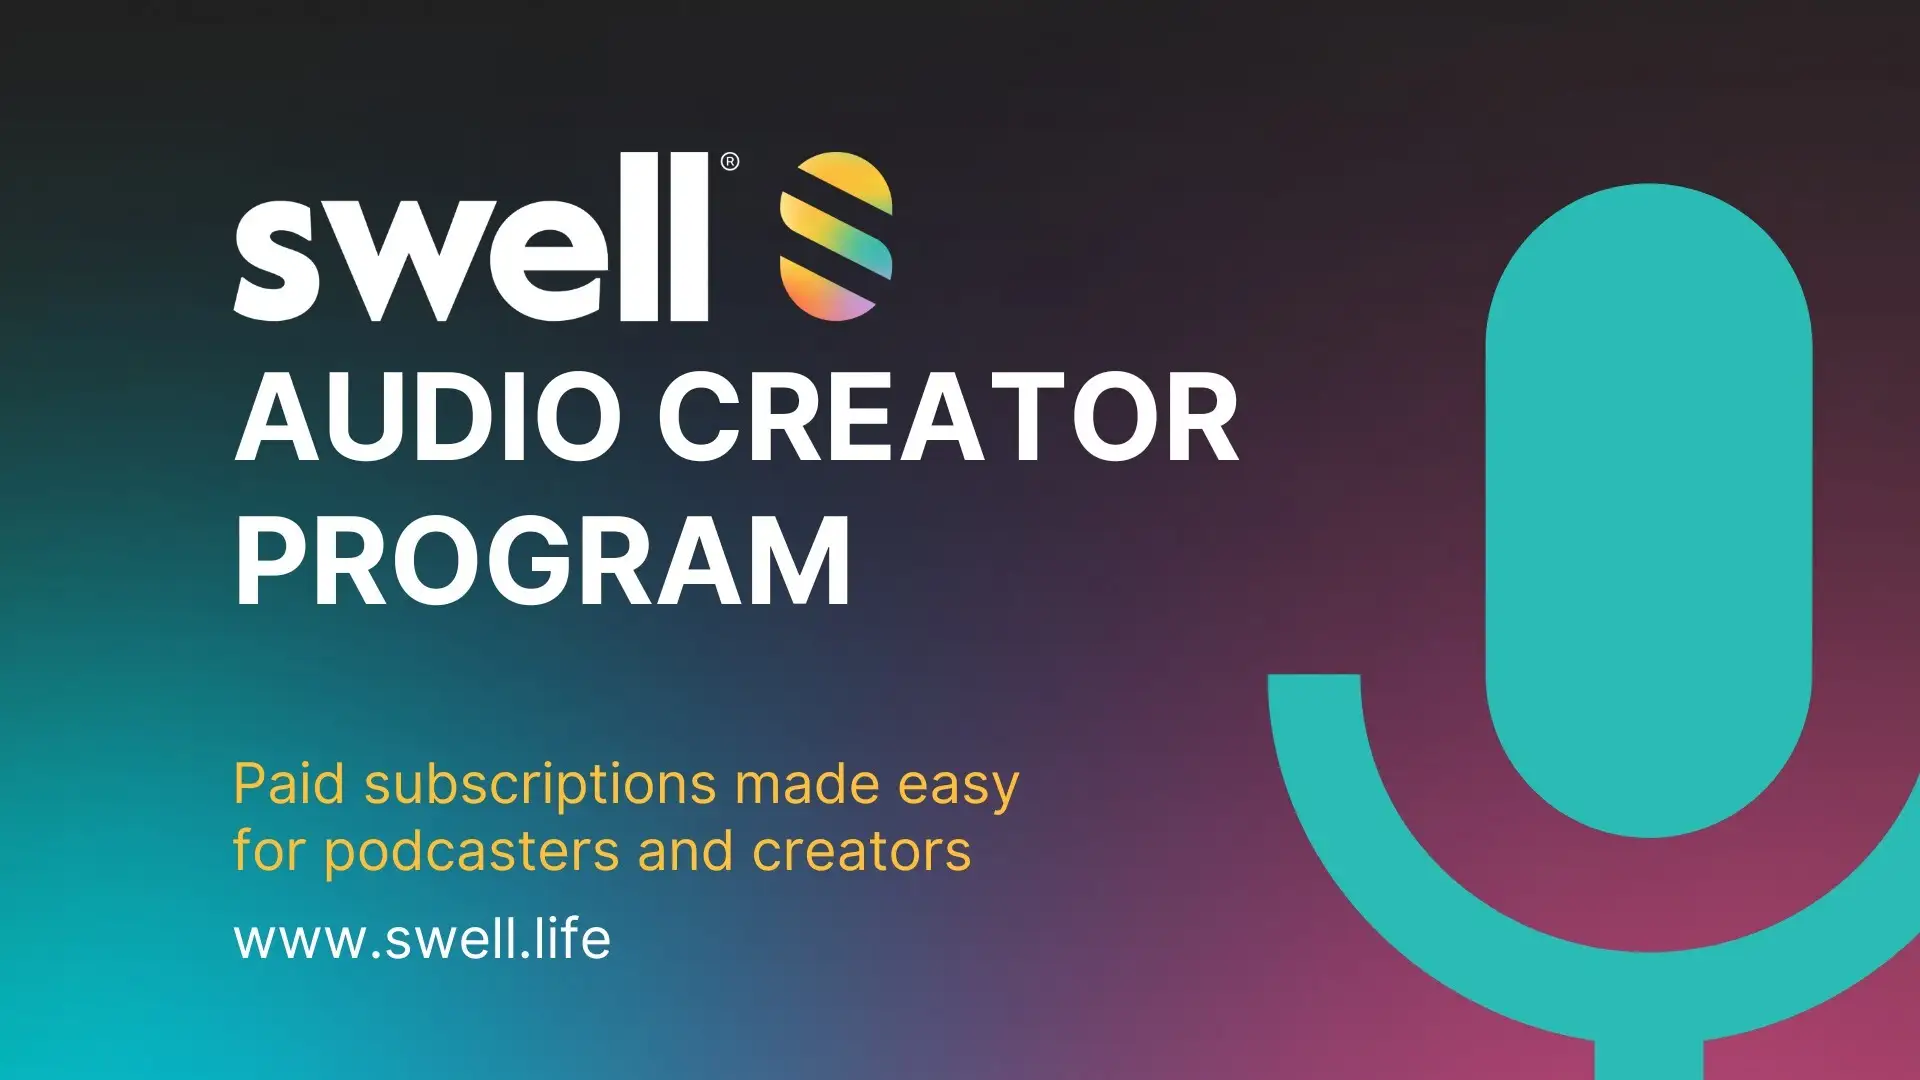 Swell Audio Creator Program is here!